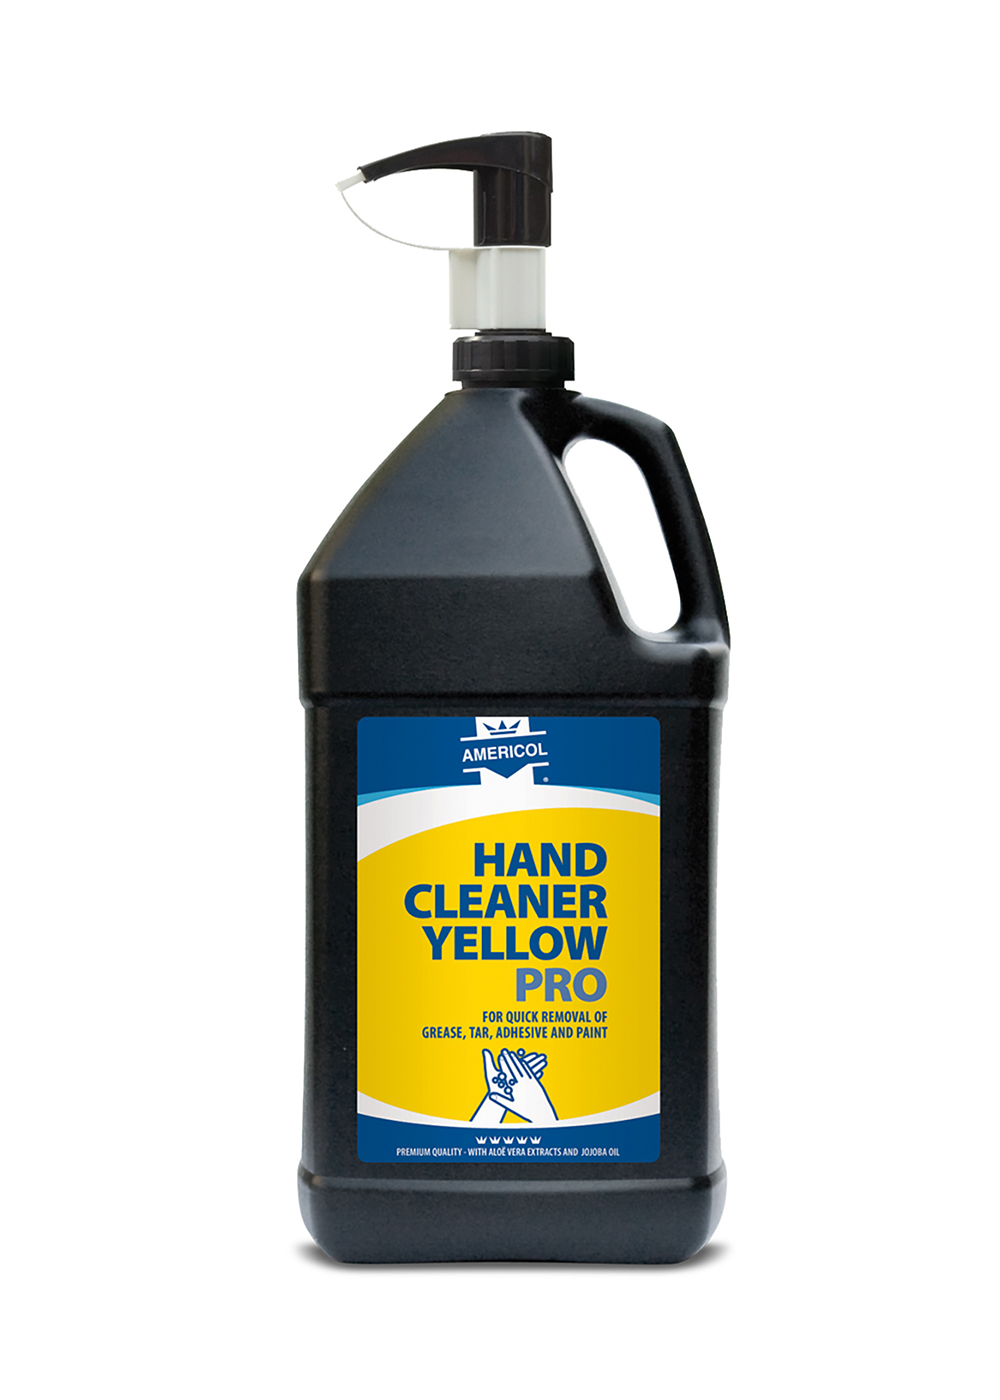 AMERICOL hand cleaner Yellow Pro